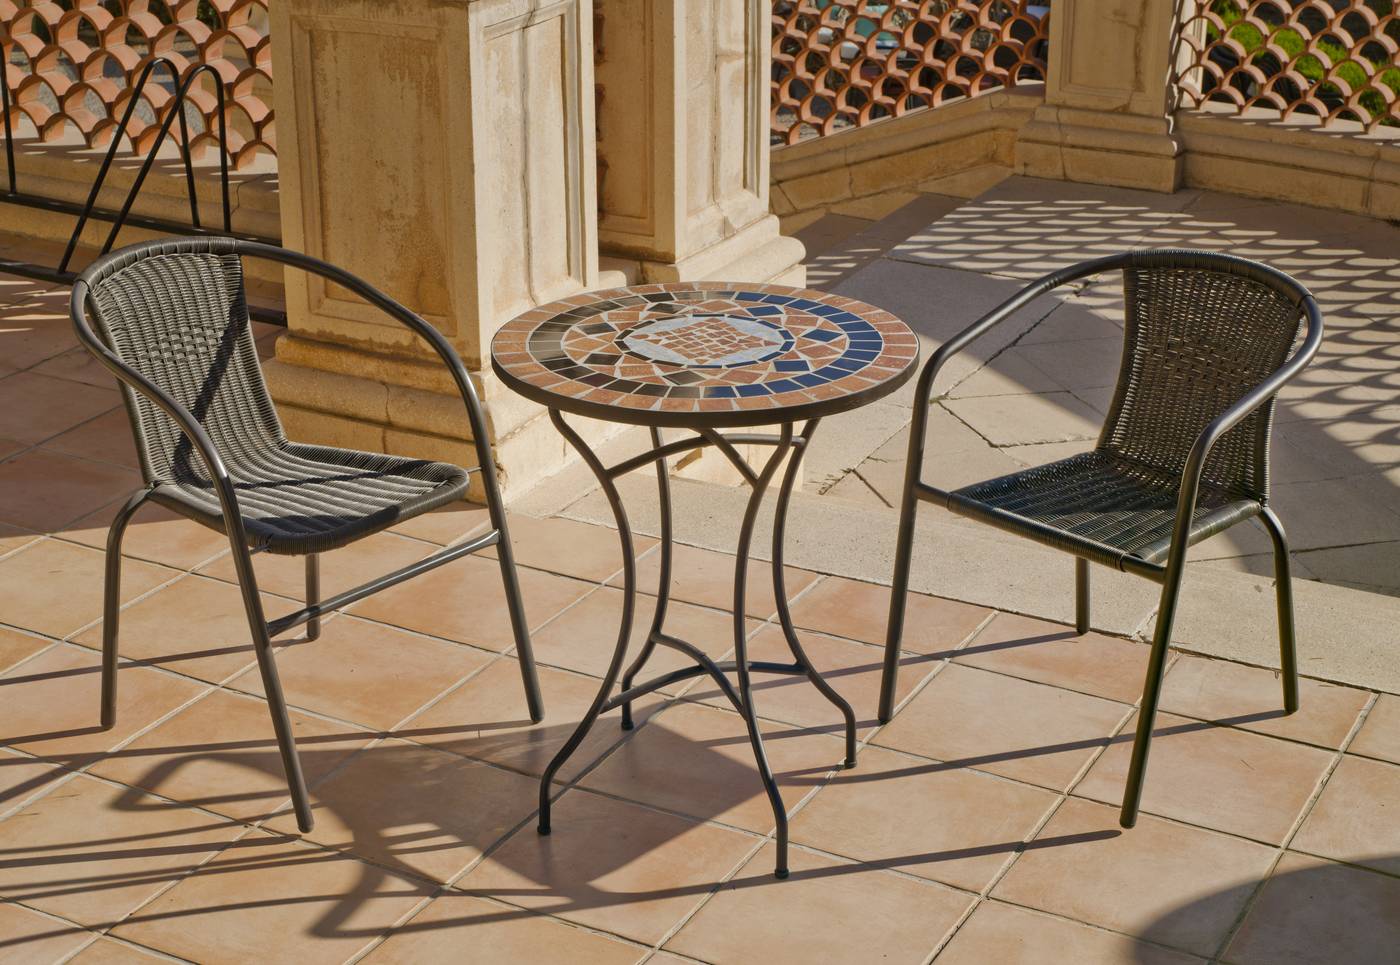 Mesa Mosaico Yasir-60 - Mesa para jardín o terraza de forja, con tablero mosaico de 60 cm. de diámetro.